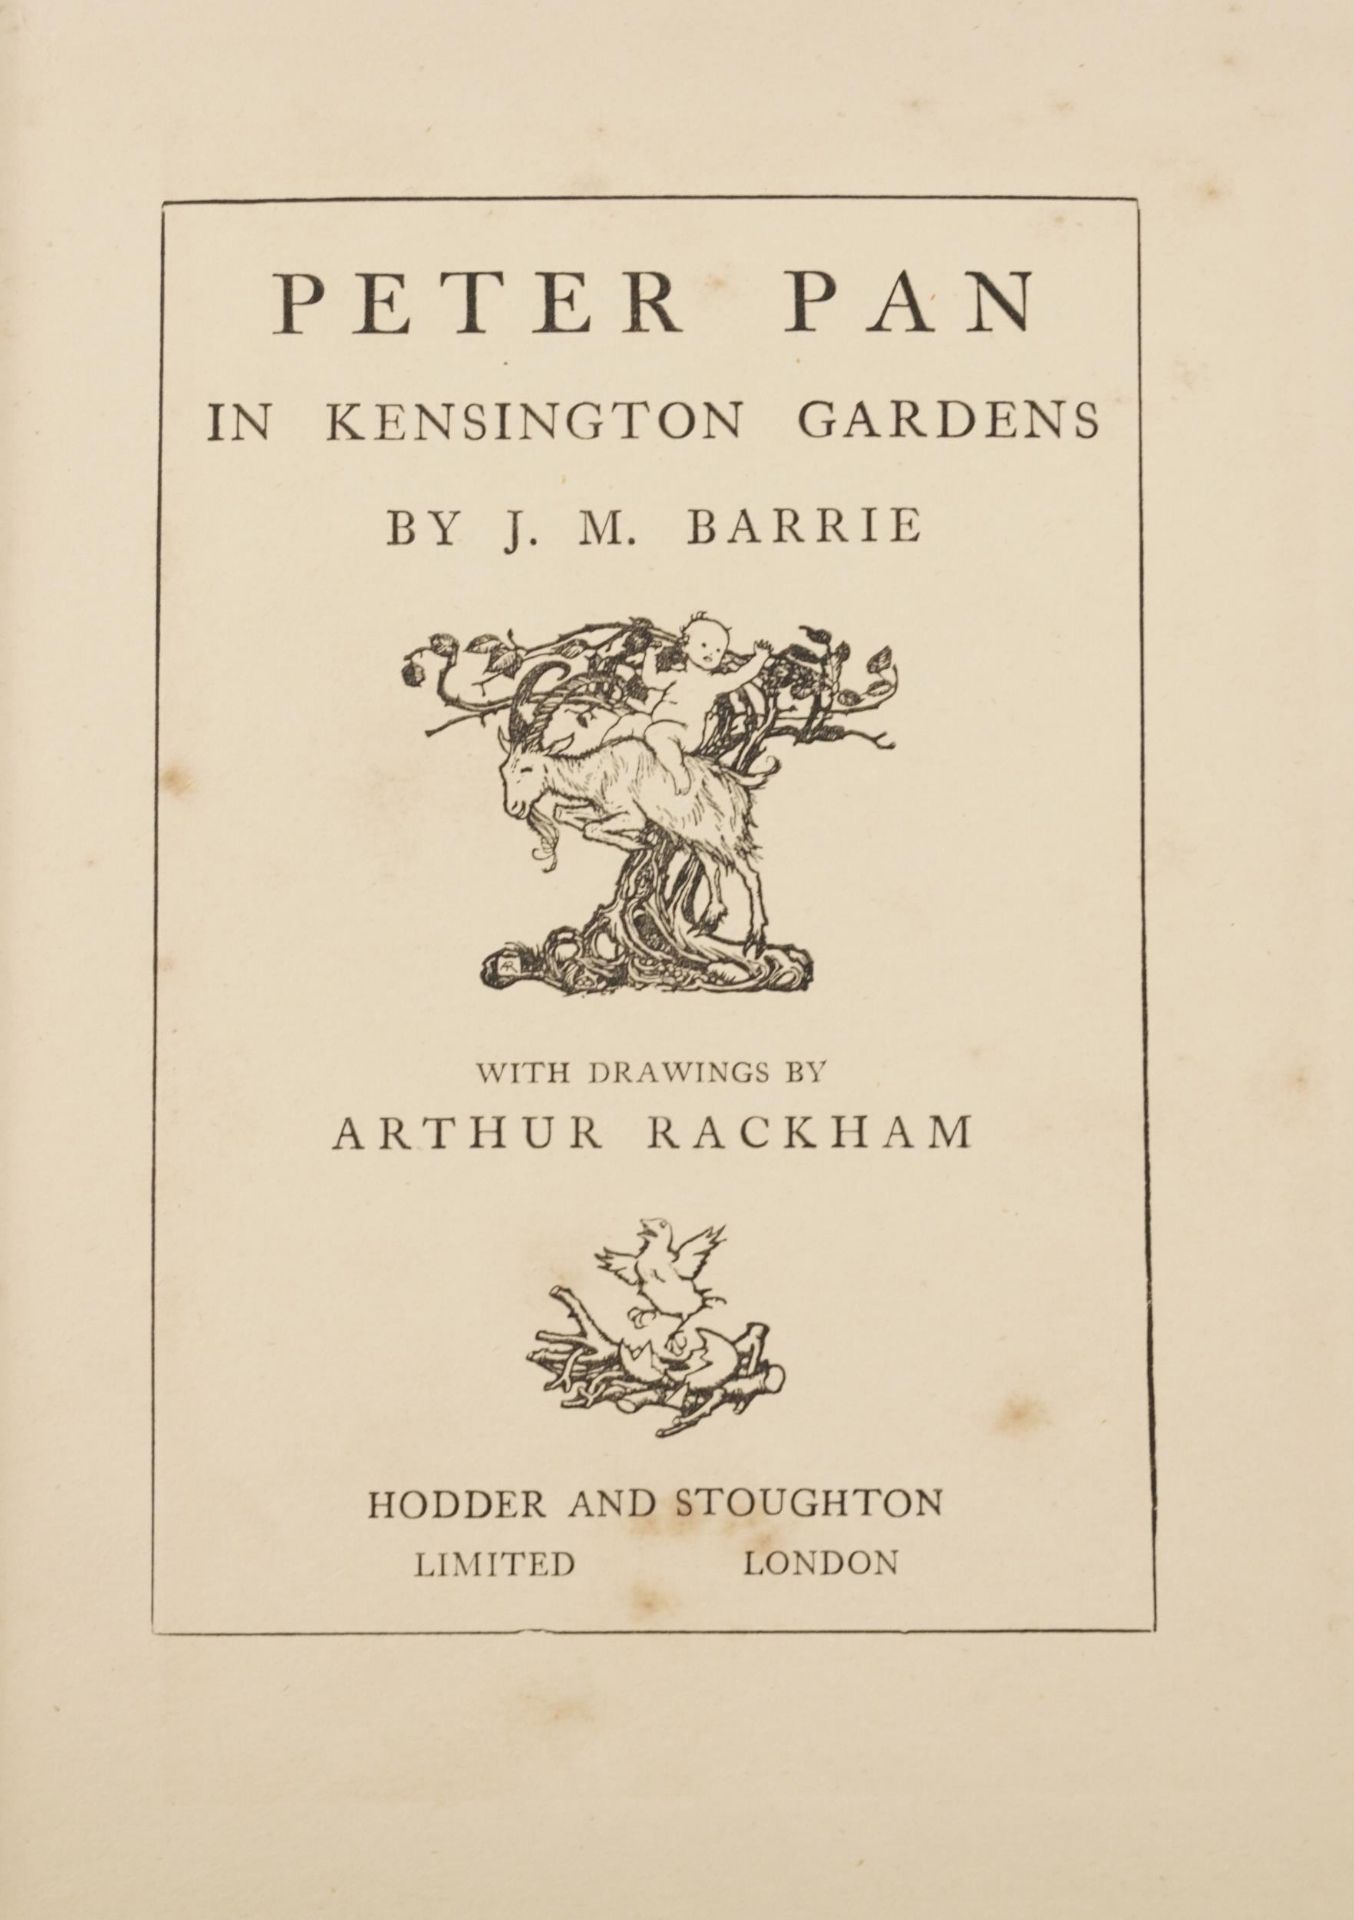 Peter Pan in Kensington Gardens, hardback book by J M Barrie with drawings by Arthur Rackham, - Image 3 of 3